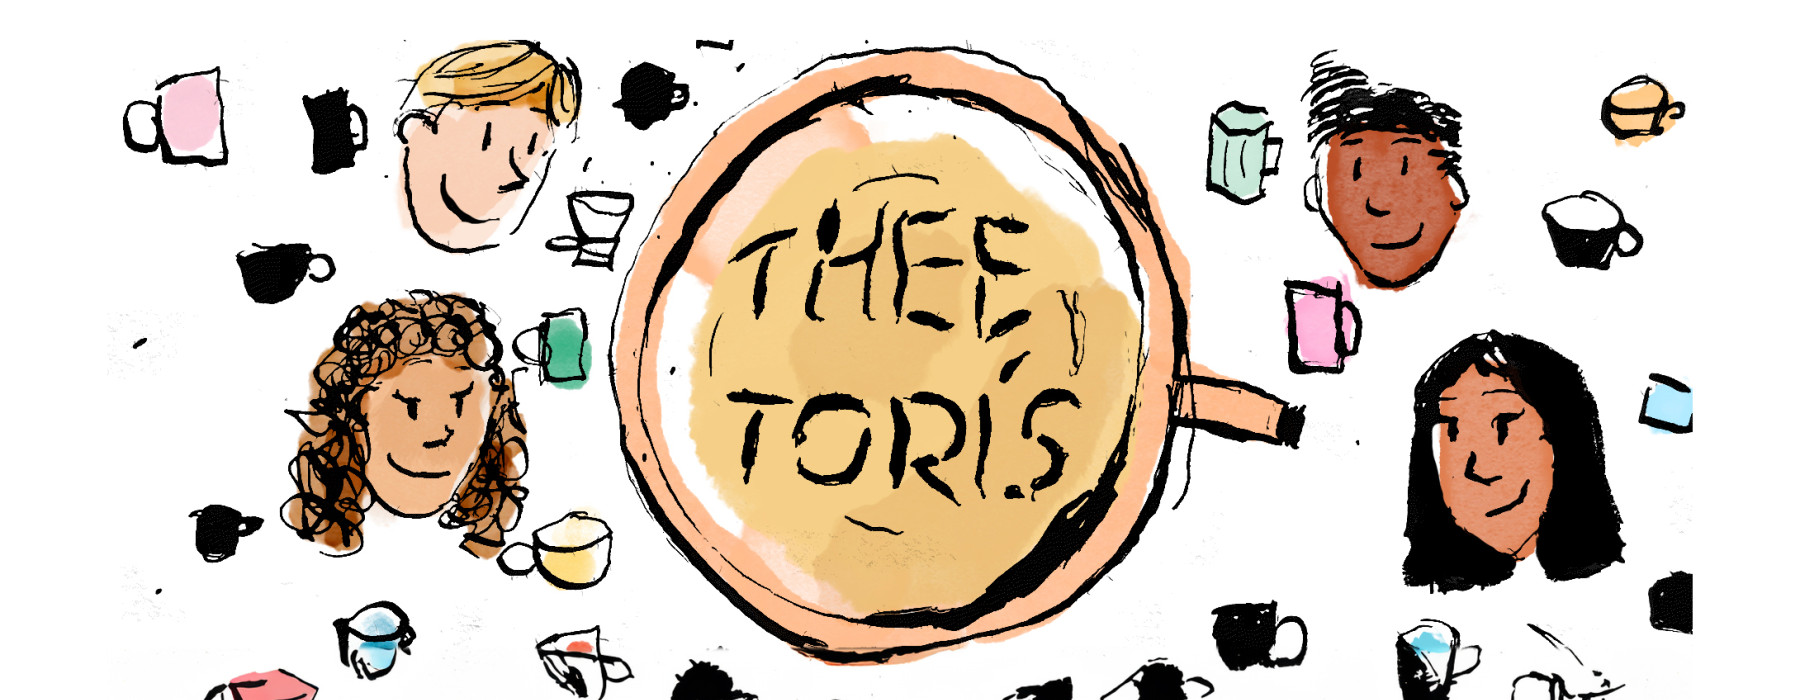 Thee toris